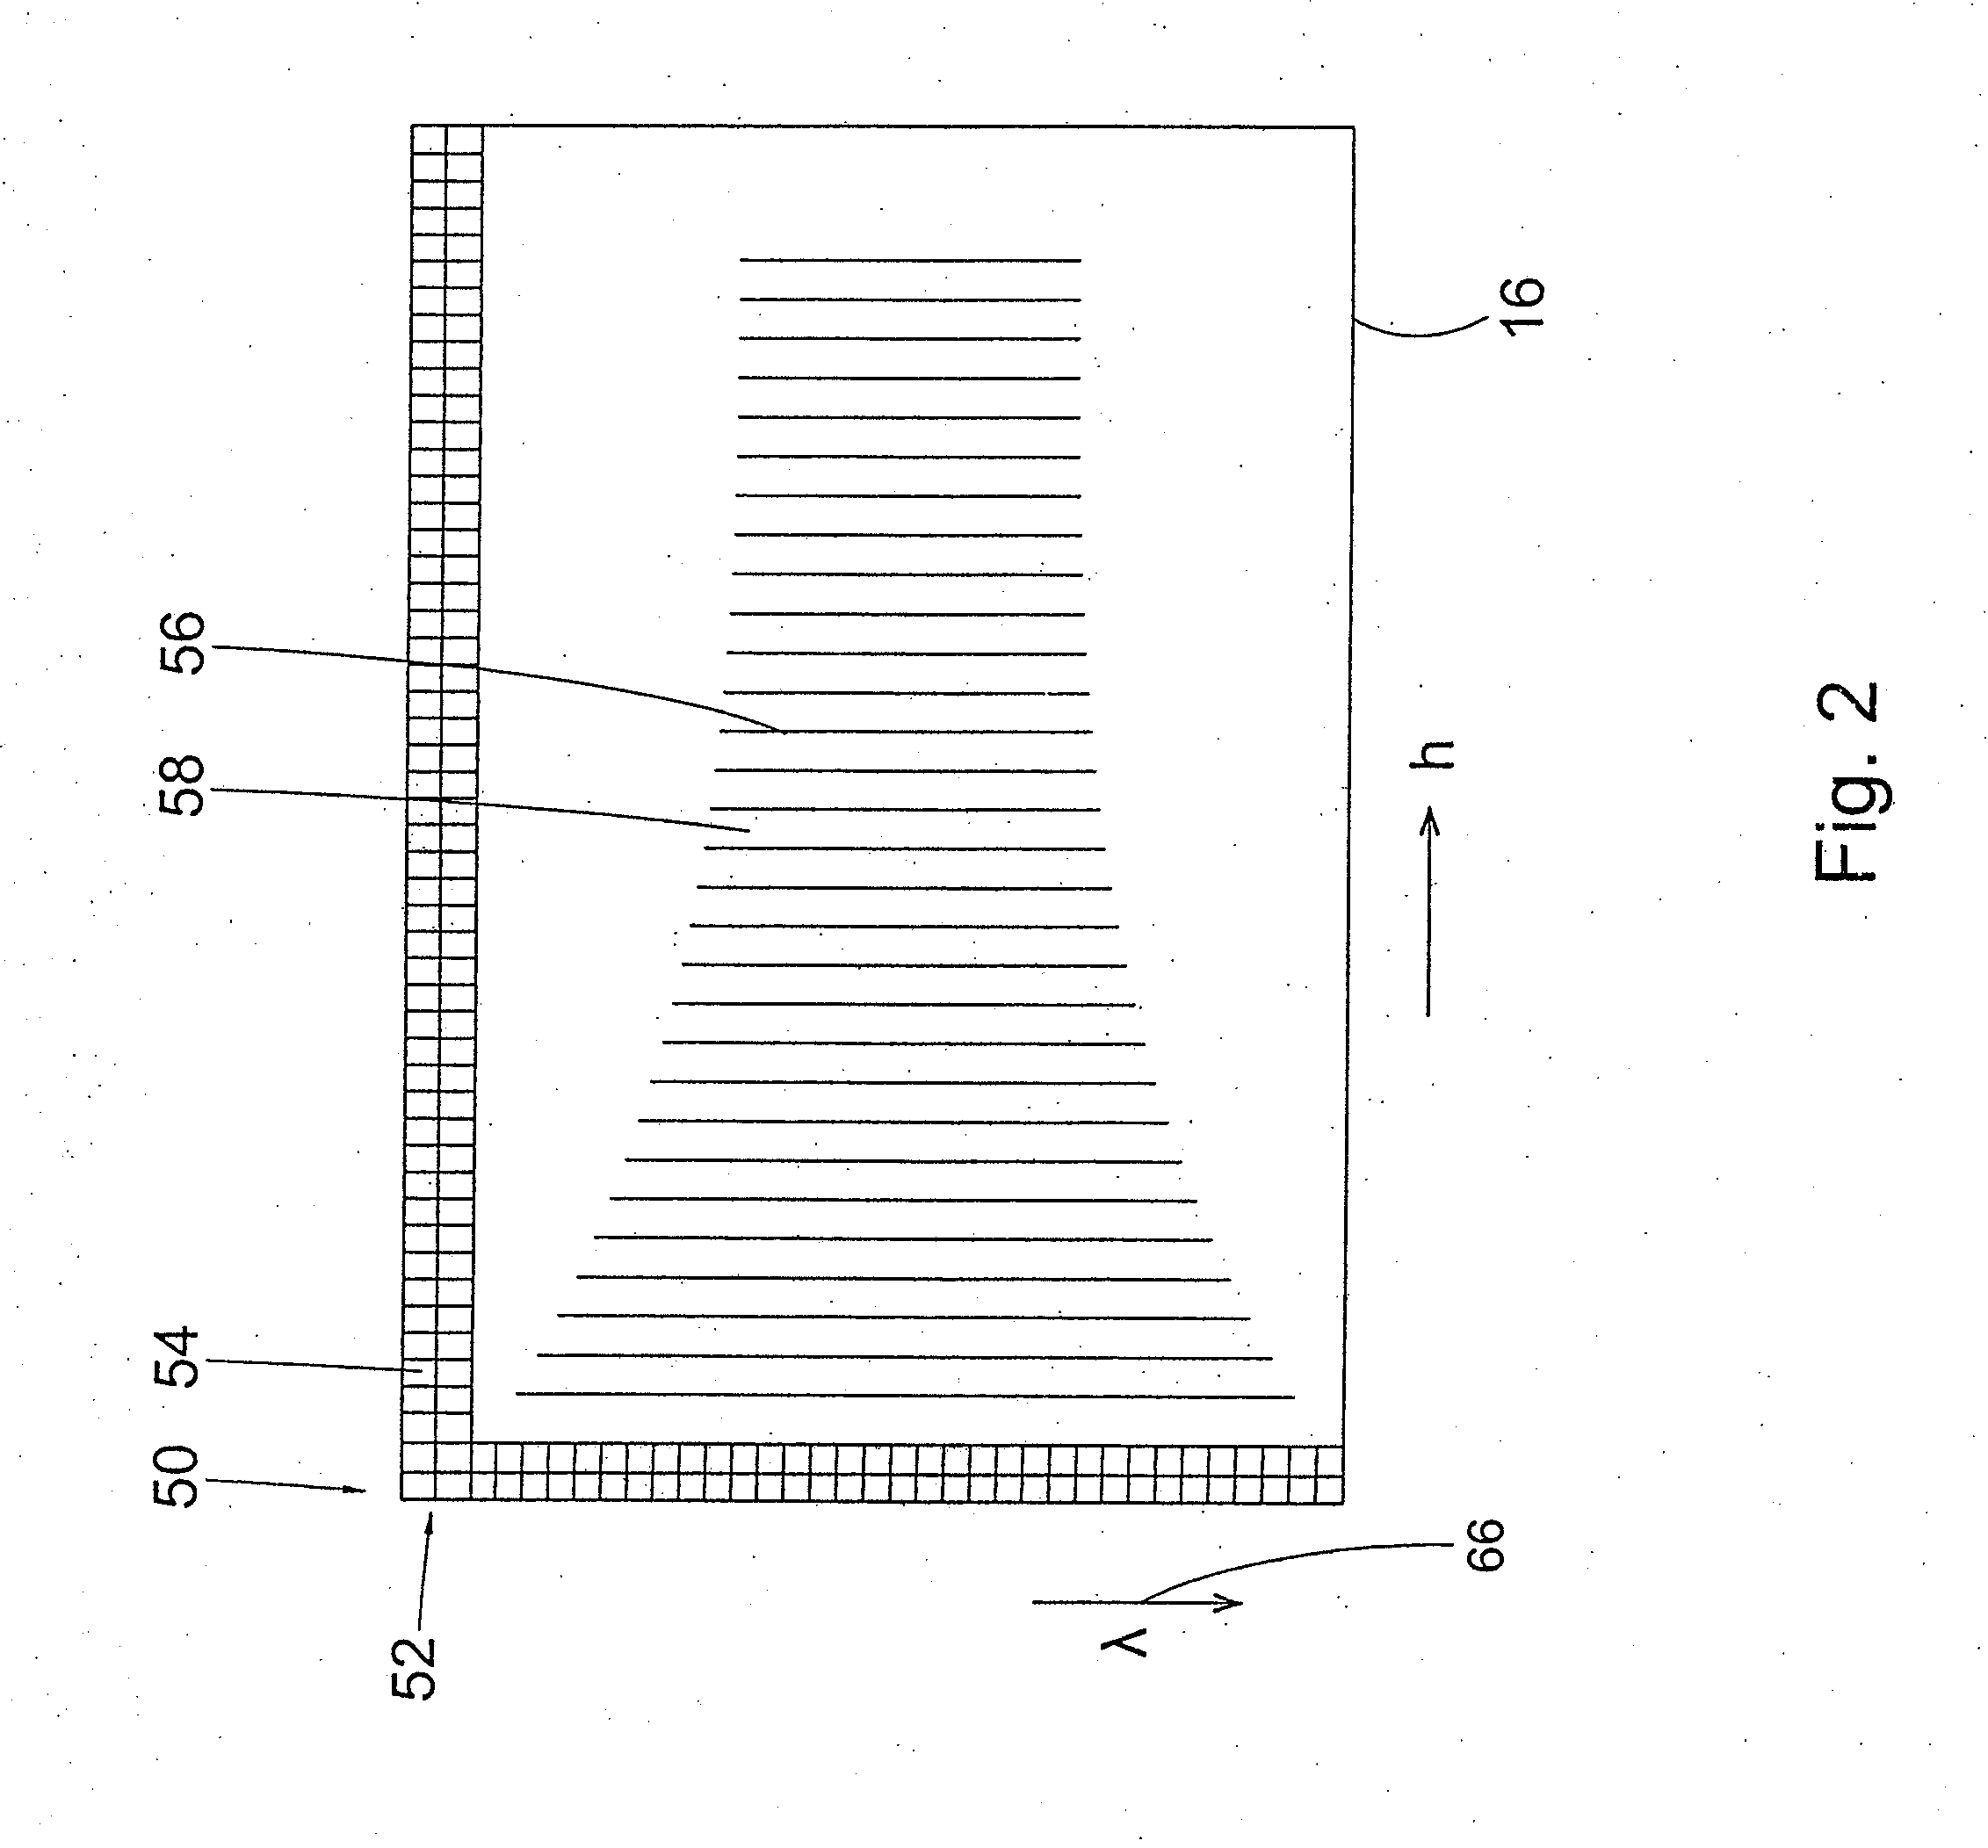 Echelle spectrometer arrangement using internal predispersion